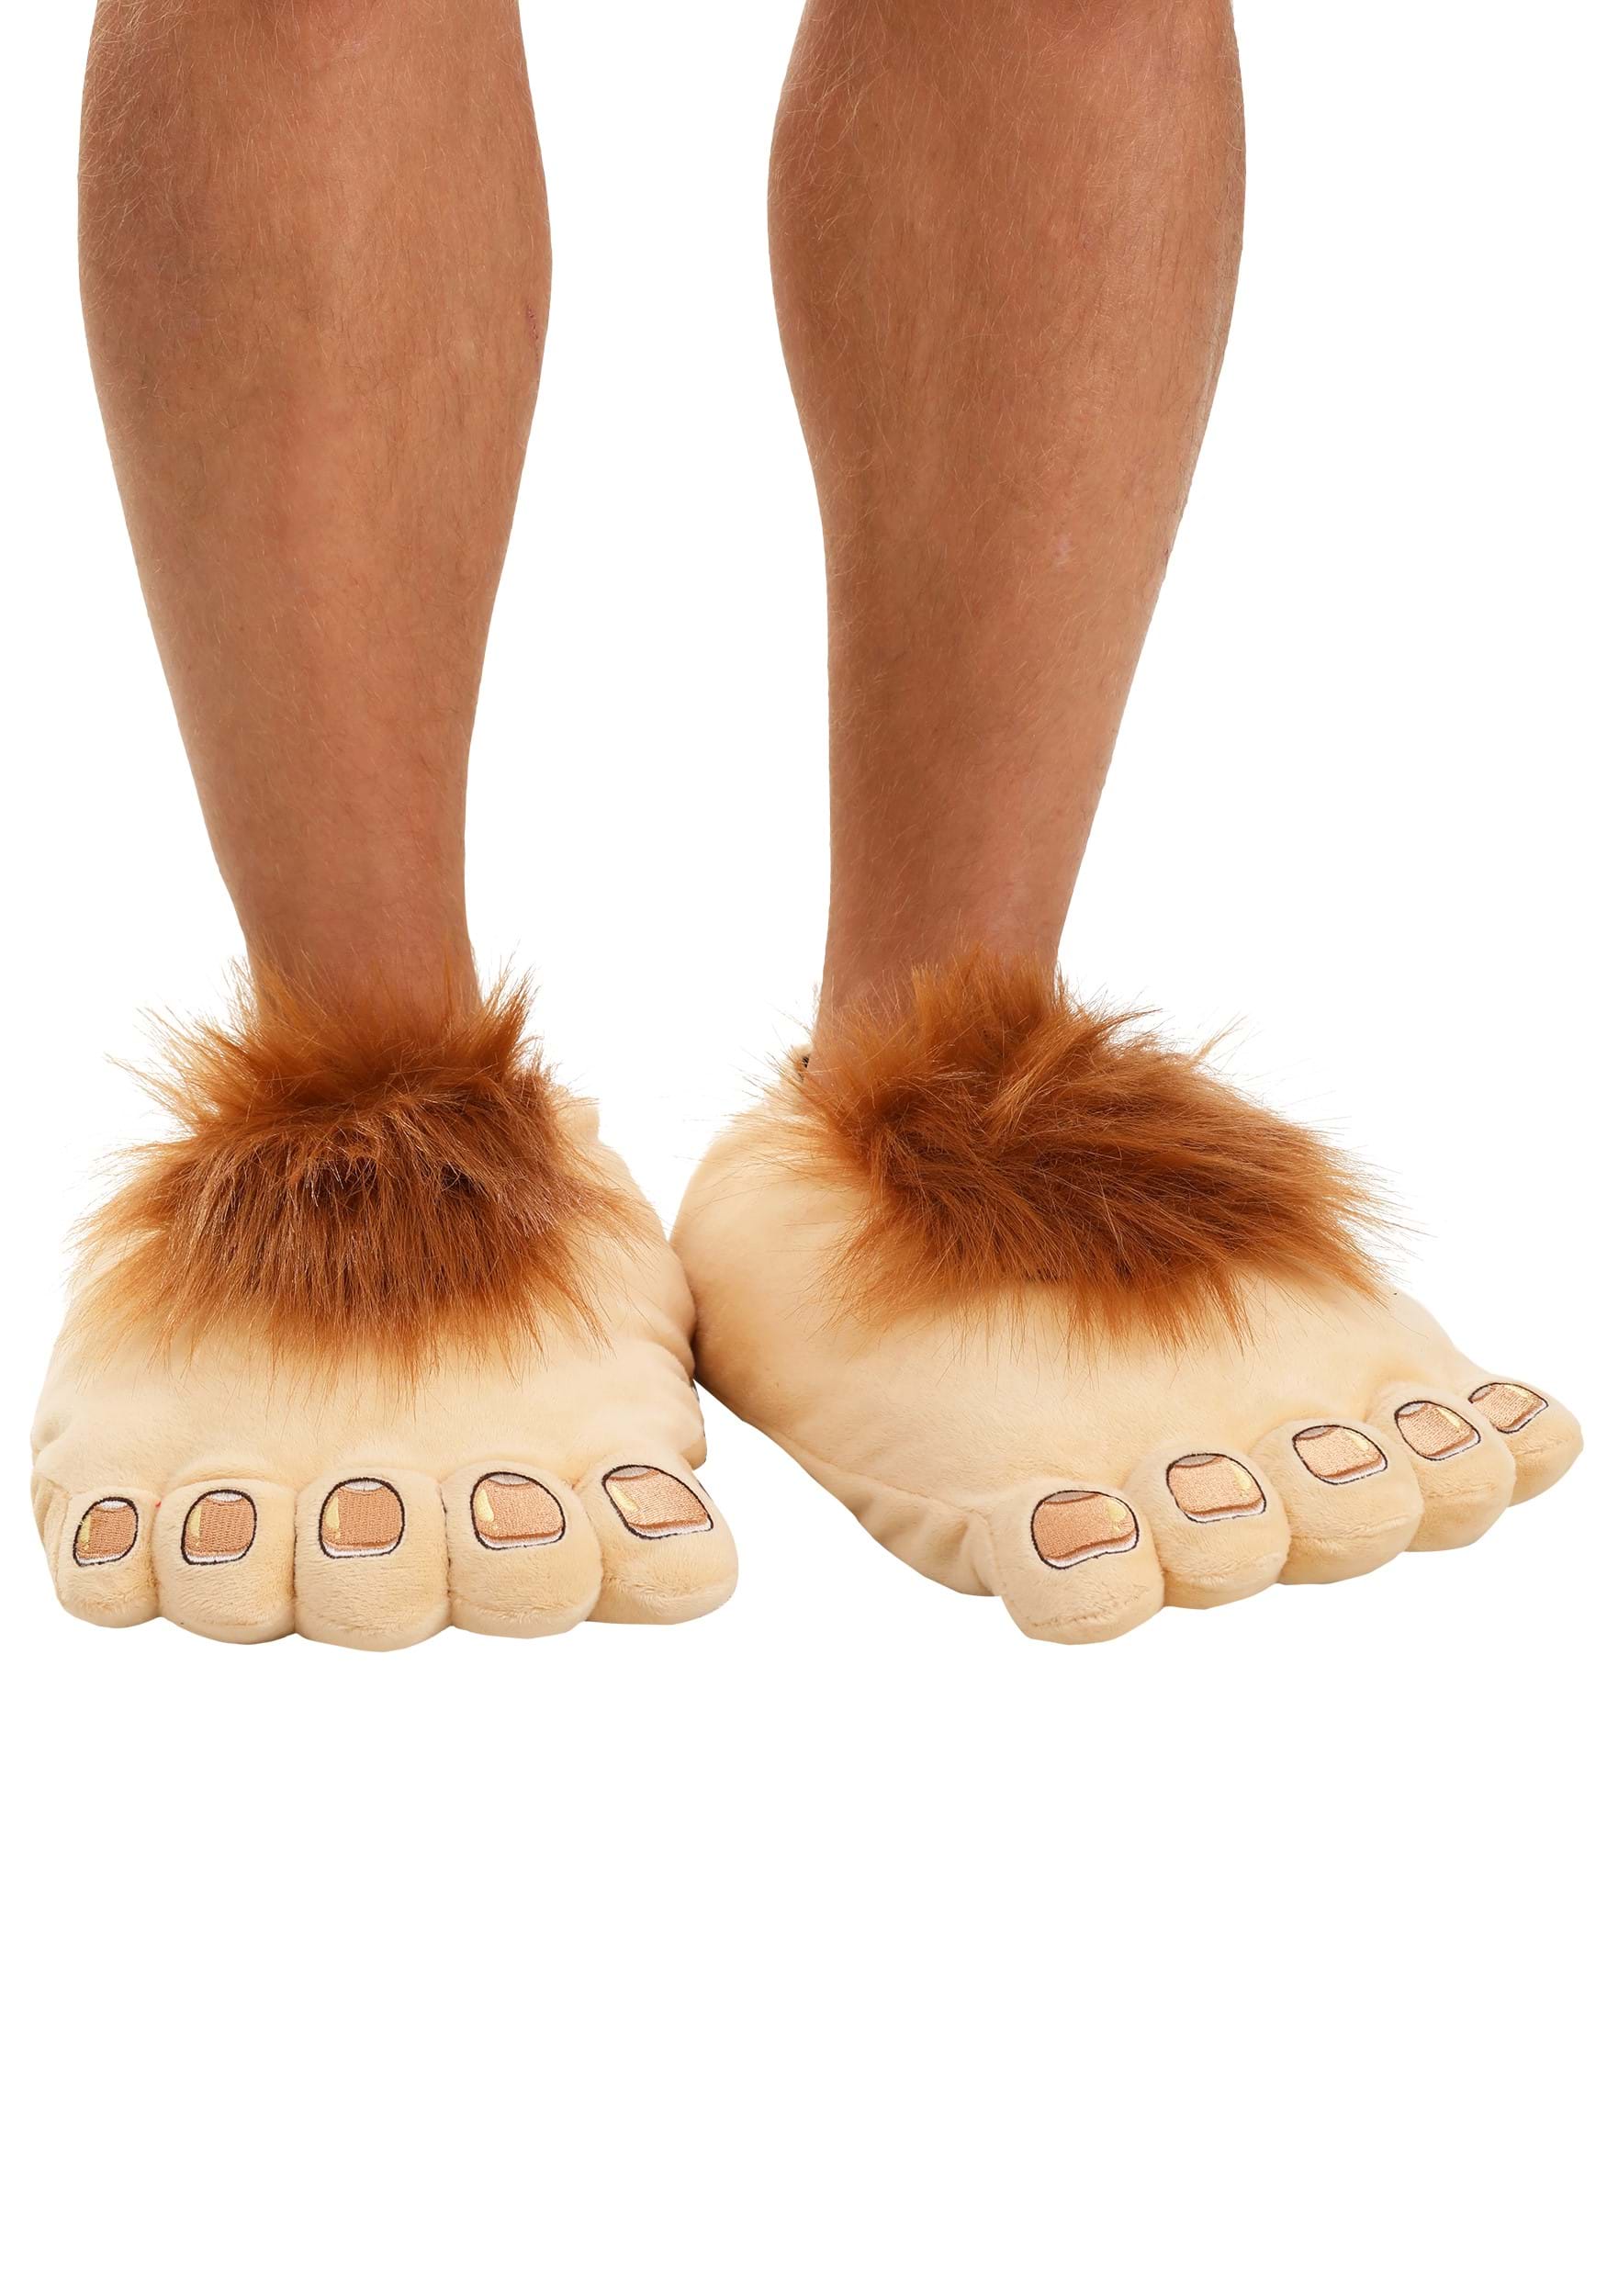 Adult Costume Hobbit Feet Accessory